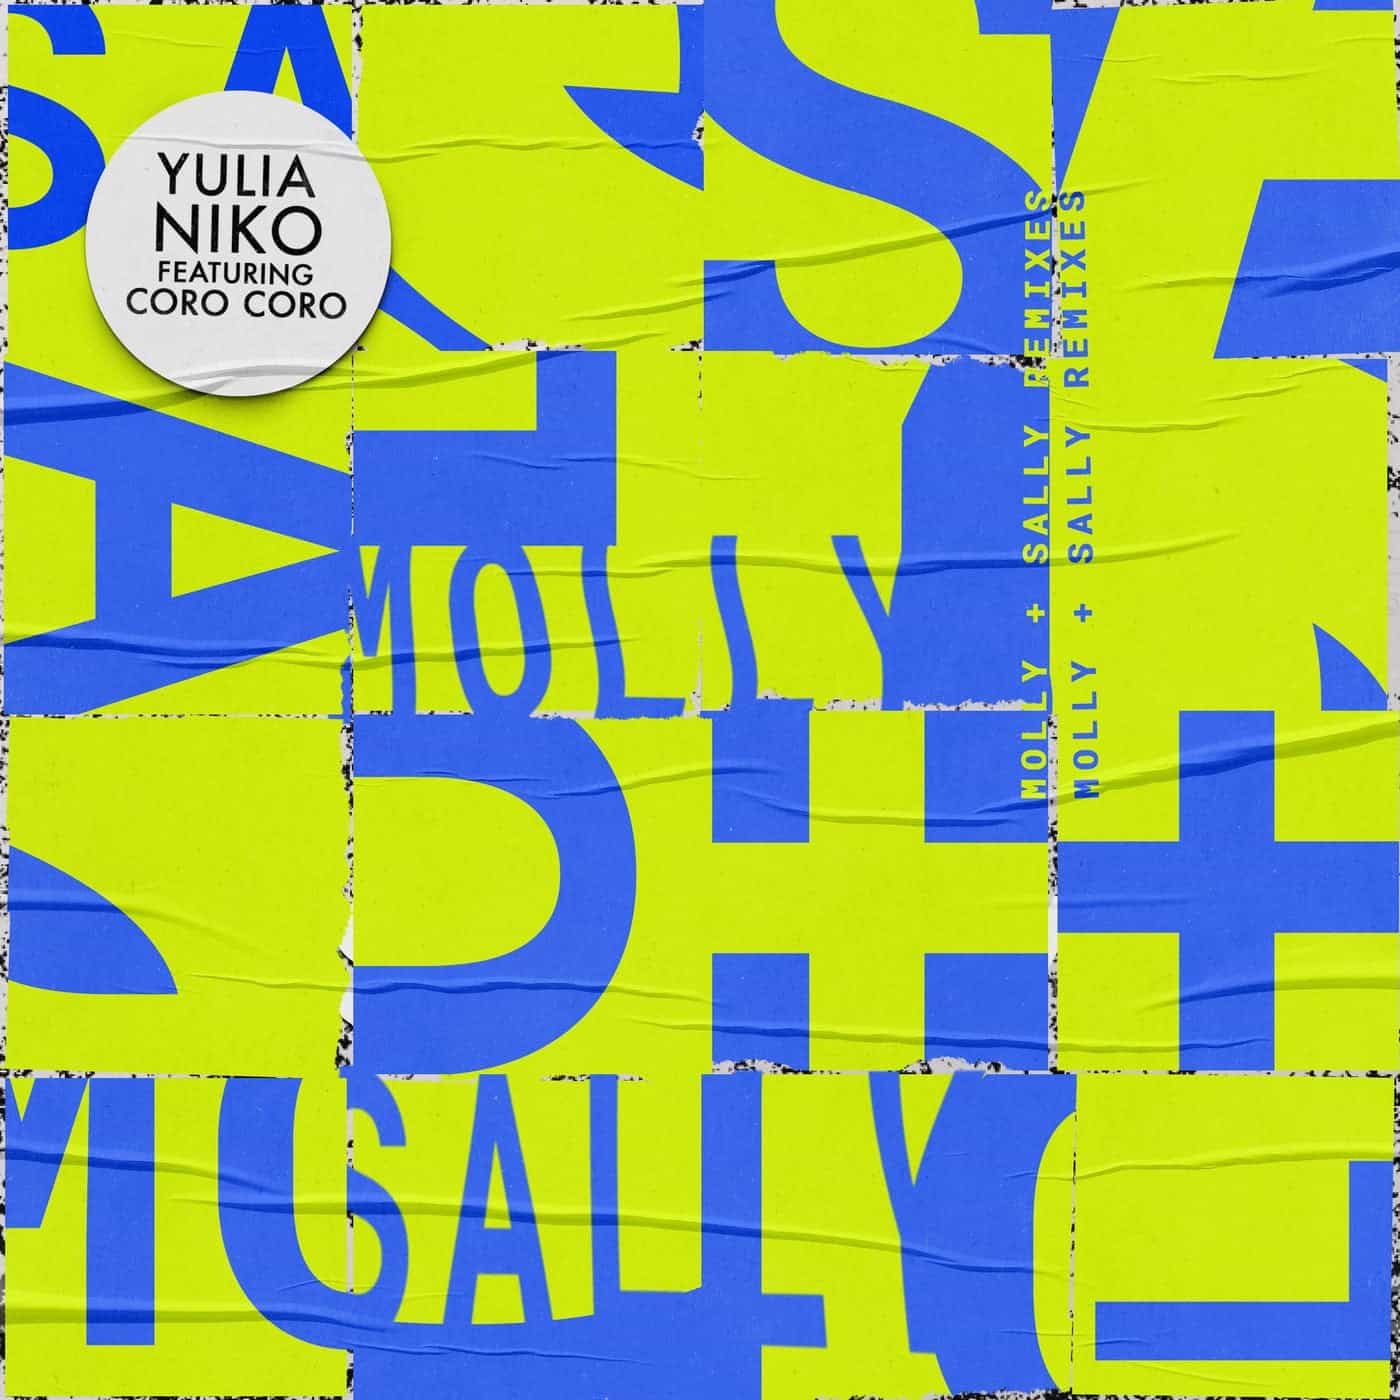 image cover: Yulia Niko, Coro Coro - Molly & Sally (Remixes) / GPM680